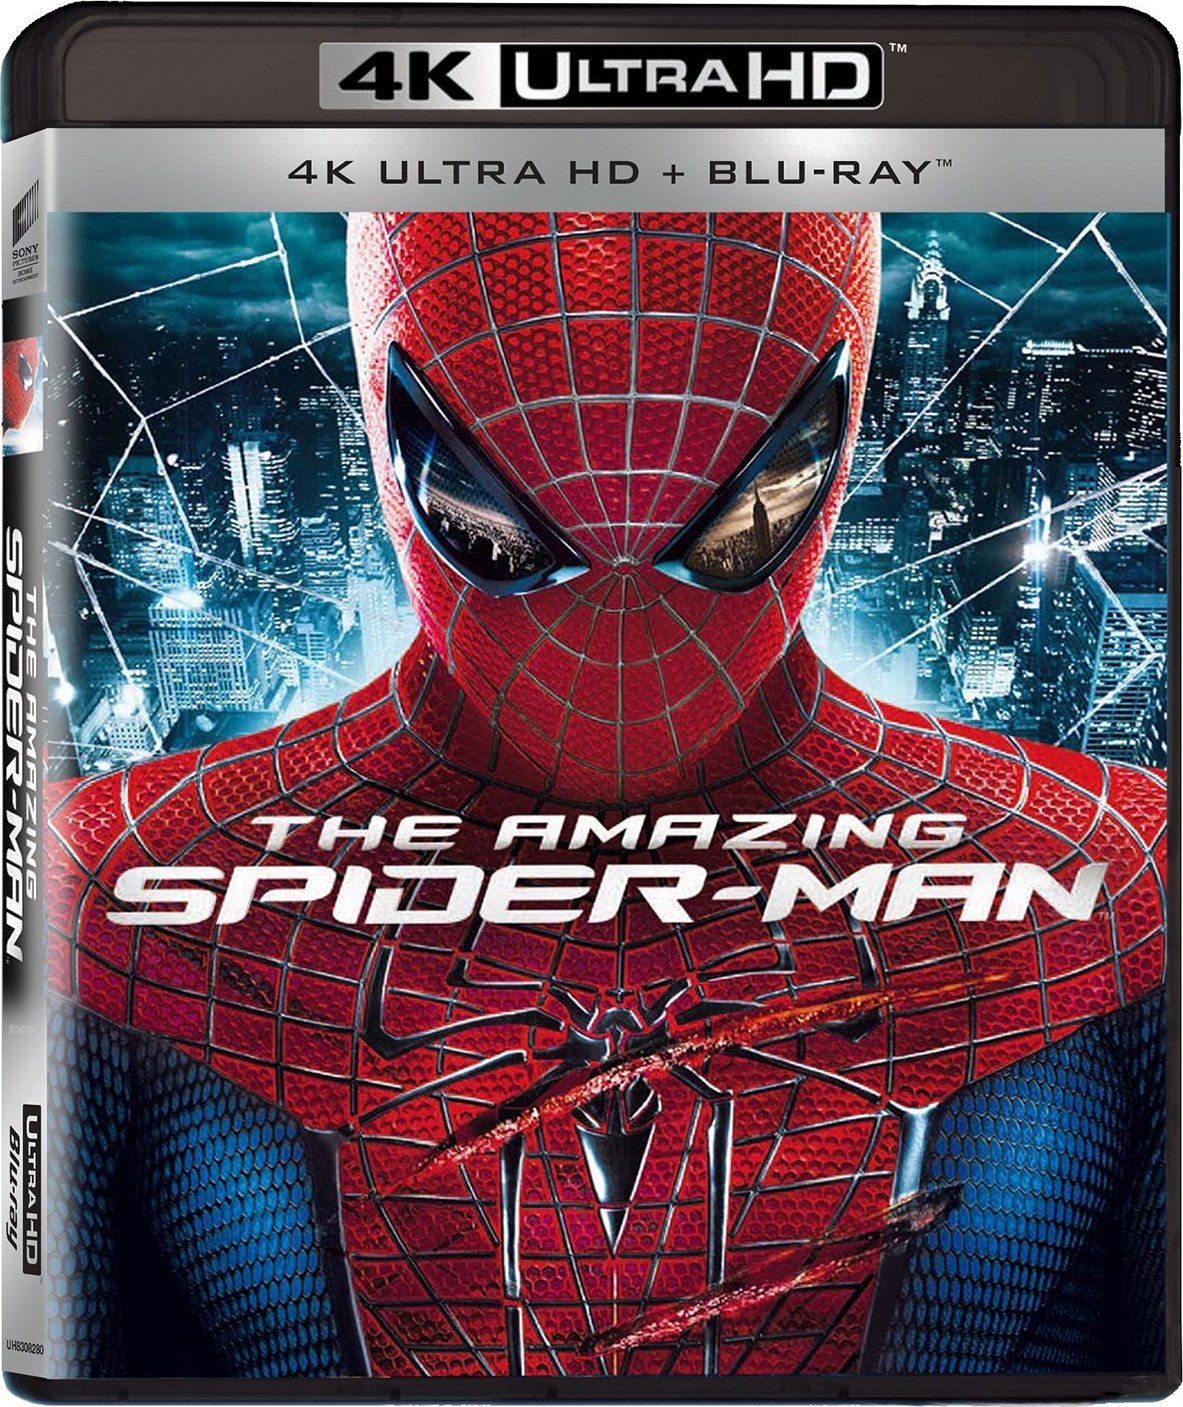 [超凡蜘蛛侠1].The.Amazing.Spider-Man.2012.UHD.BluRay.2160p.HEVC.TrueHD.7.1-NIMA4K   56.06G-1.jpg